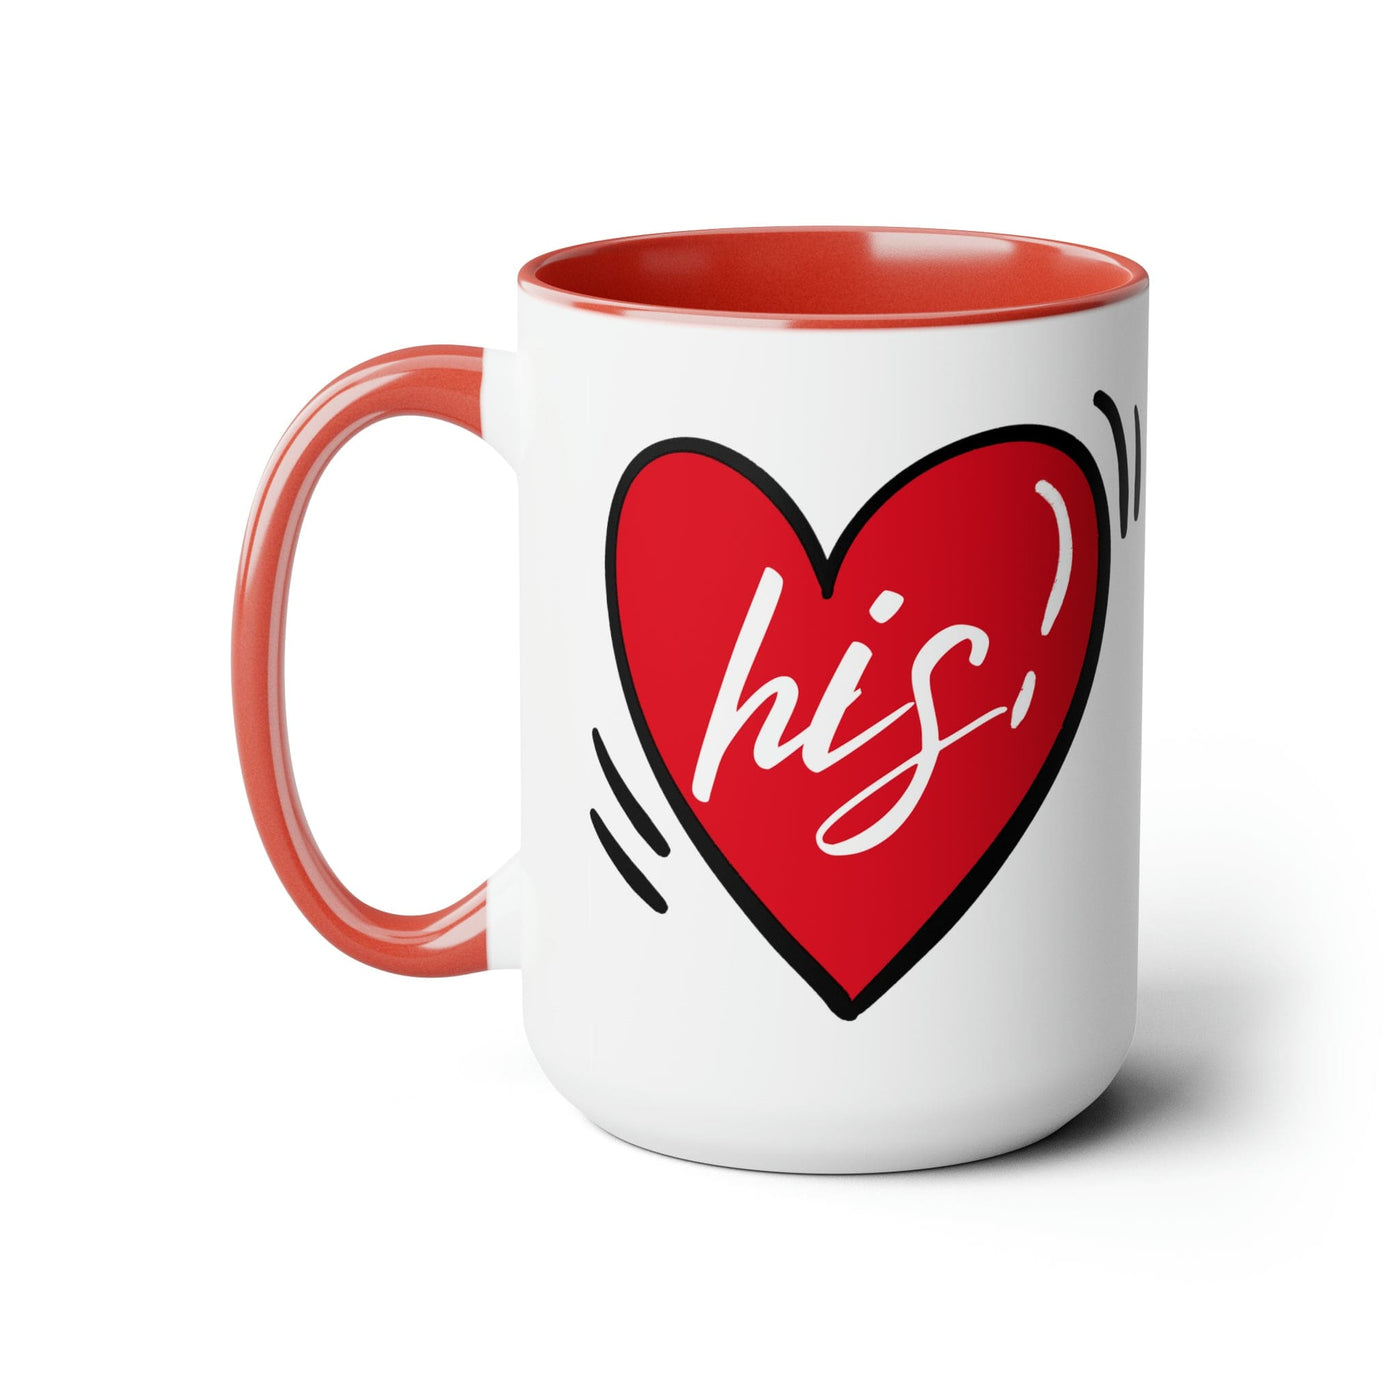 Accent Ceramic Coffee Mug 15oz - Say It Soul His Heart Couples - Decorative